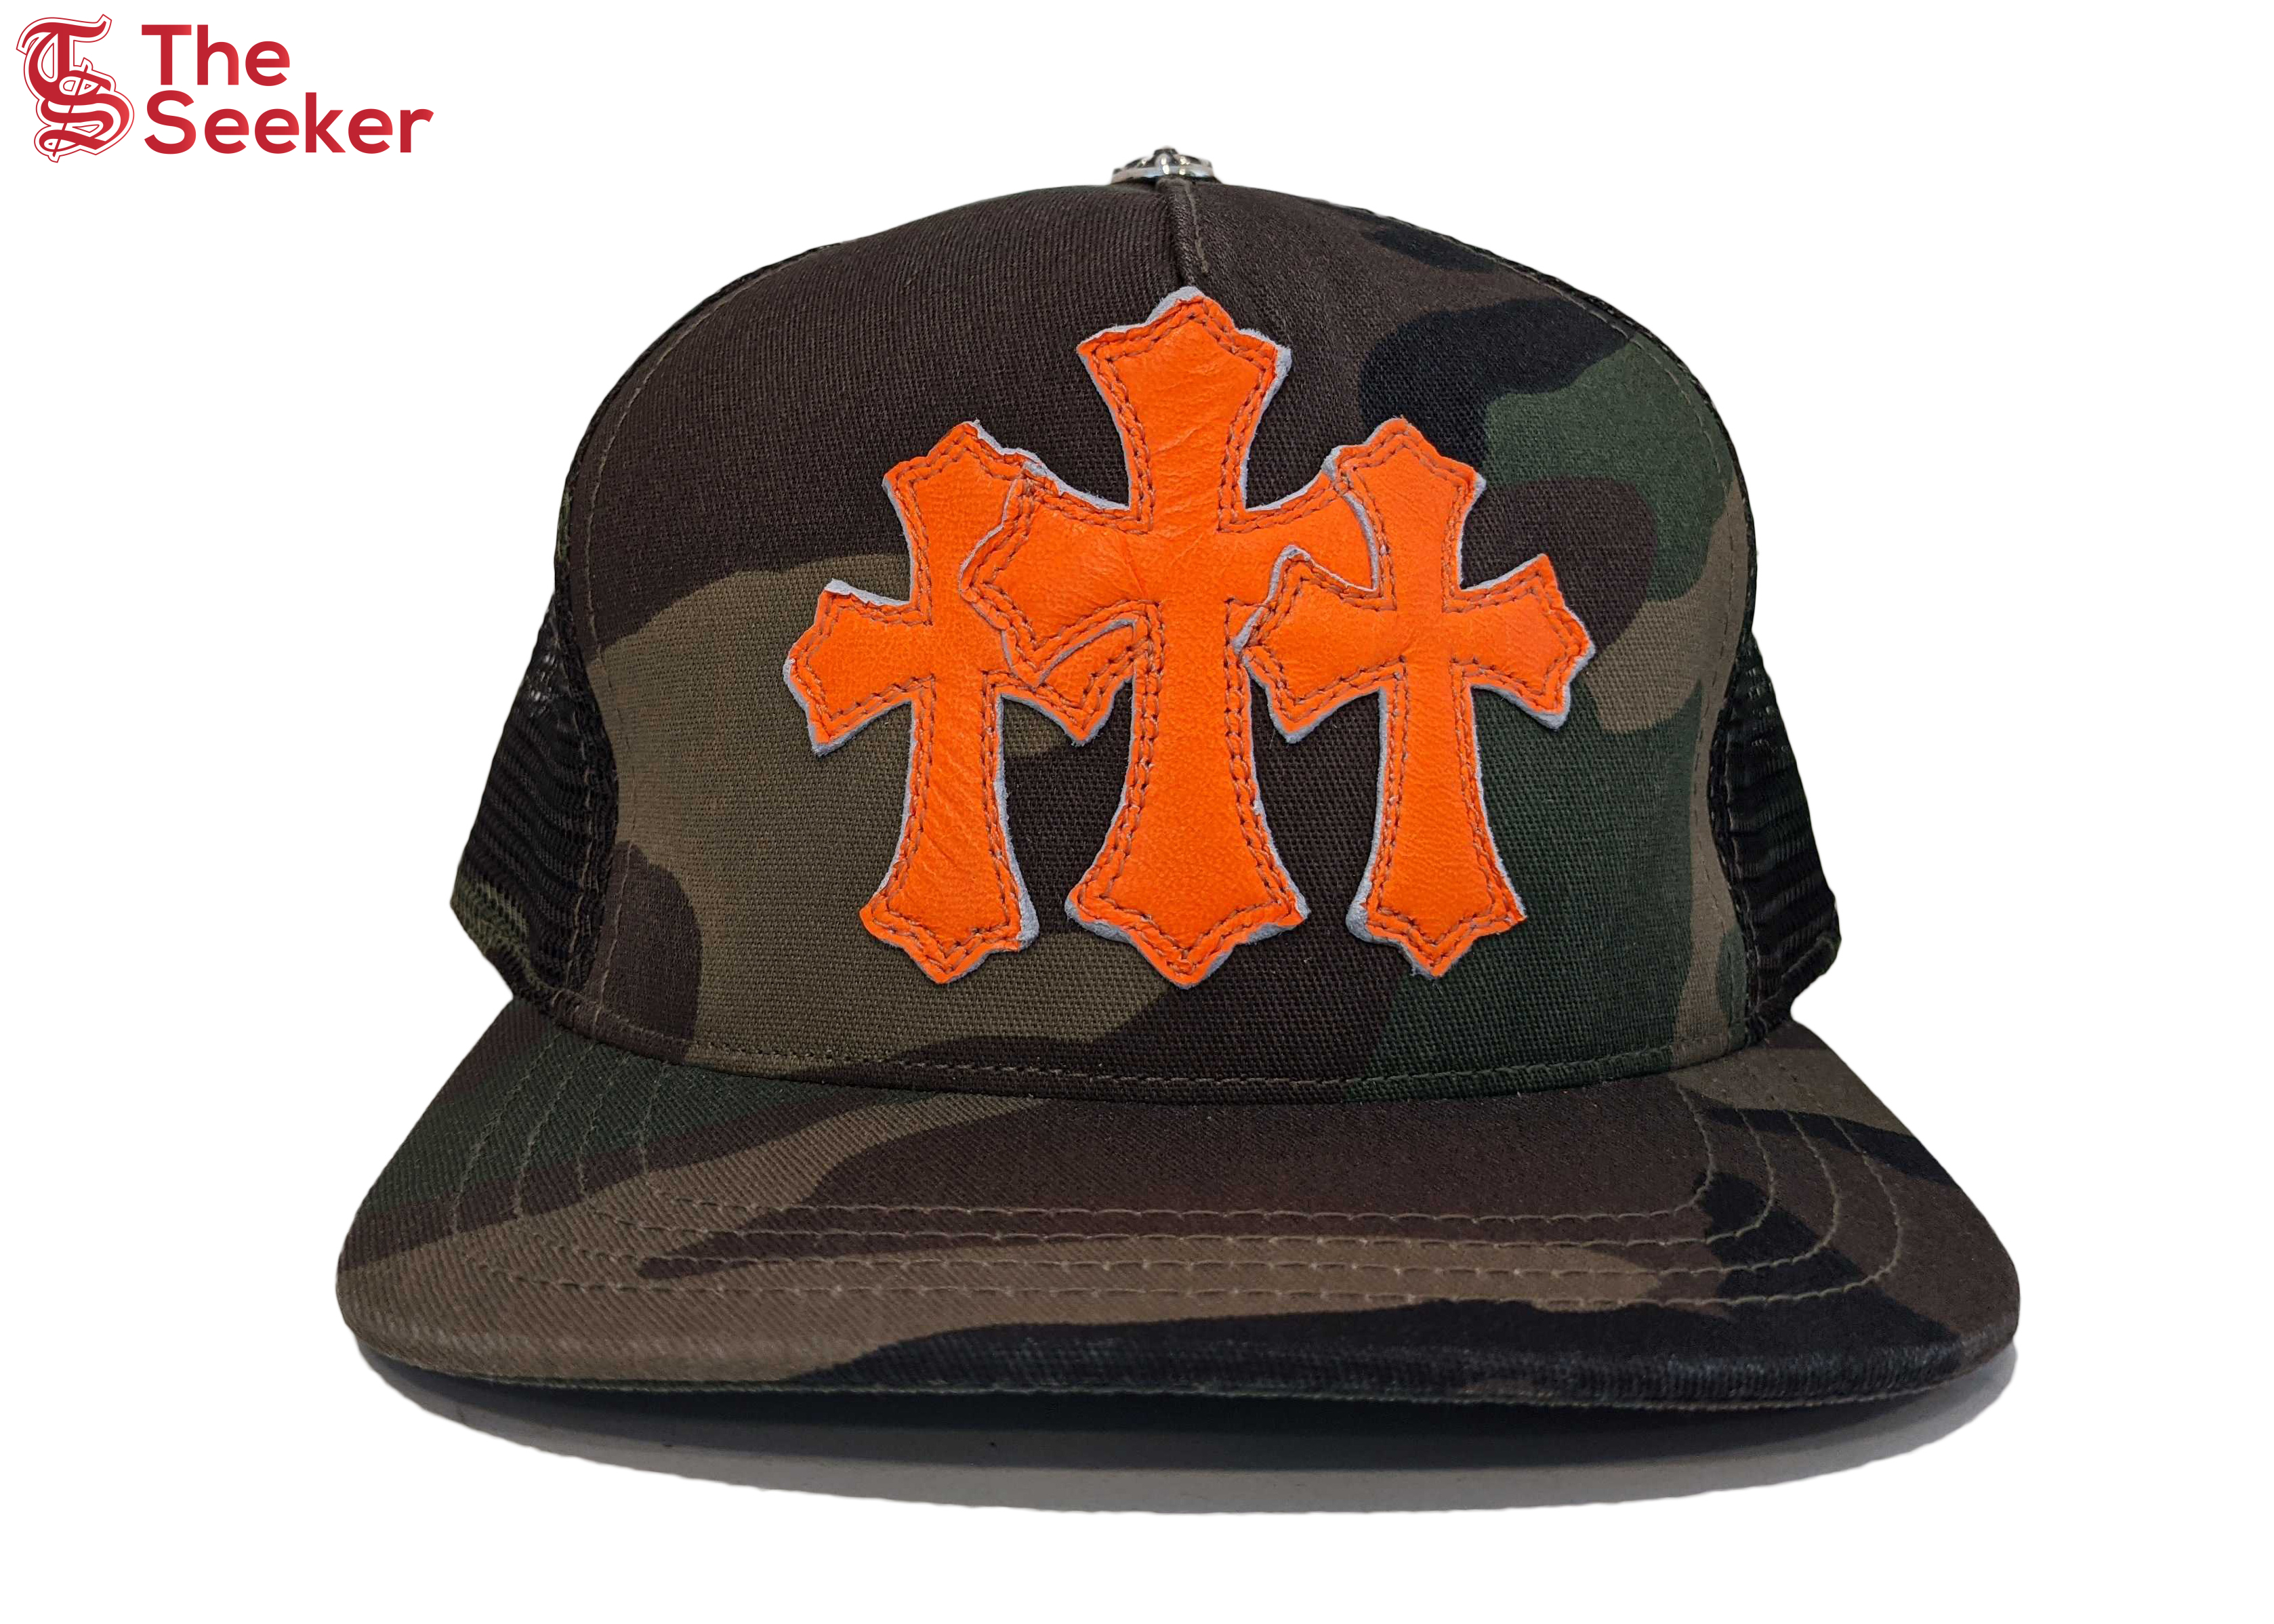 Chrome Hearts Cemetery Trucker Hat Camo/Orange